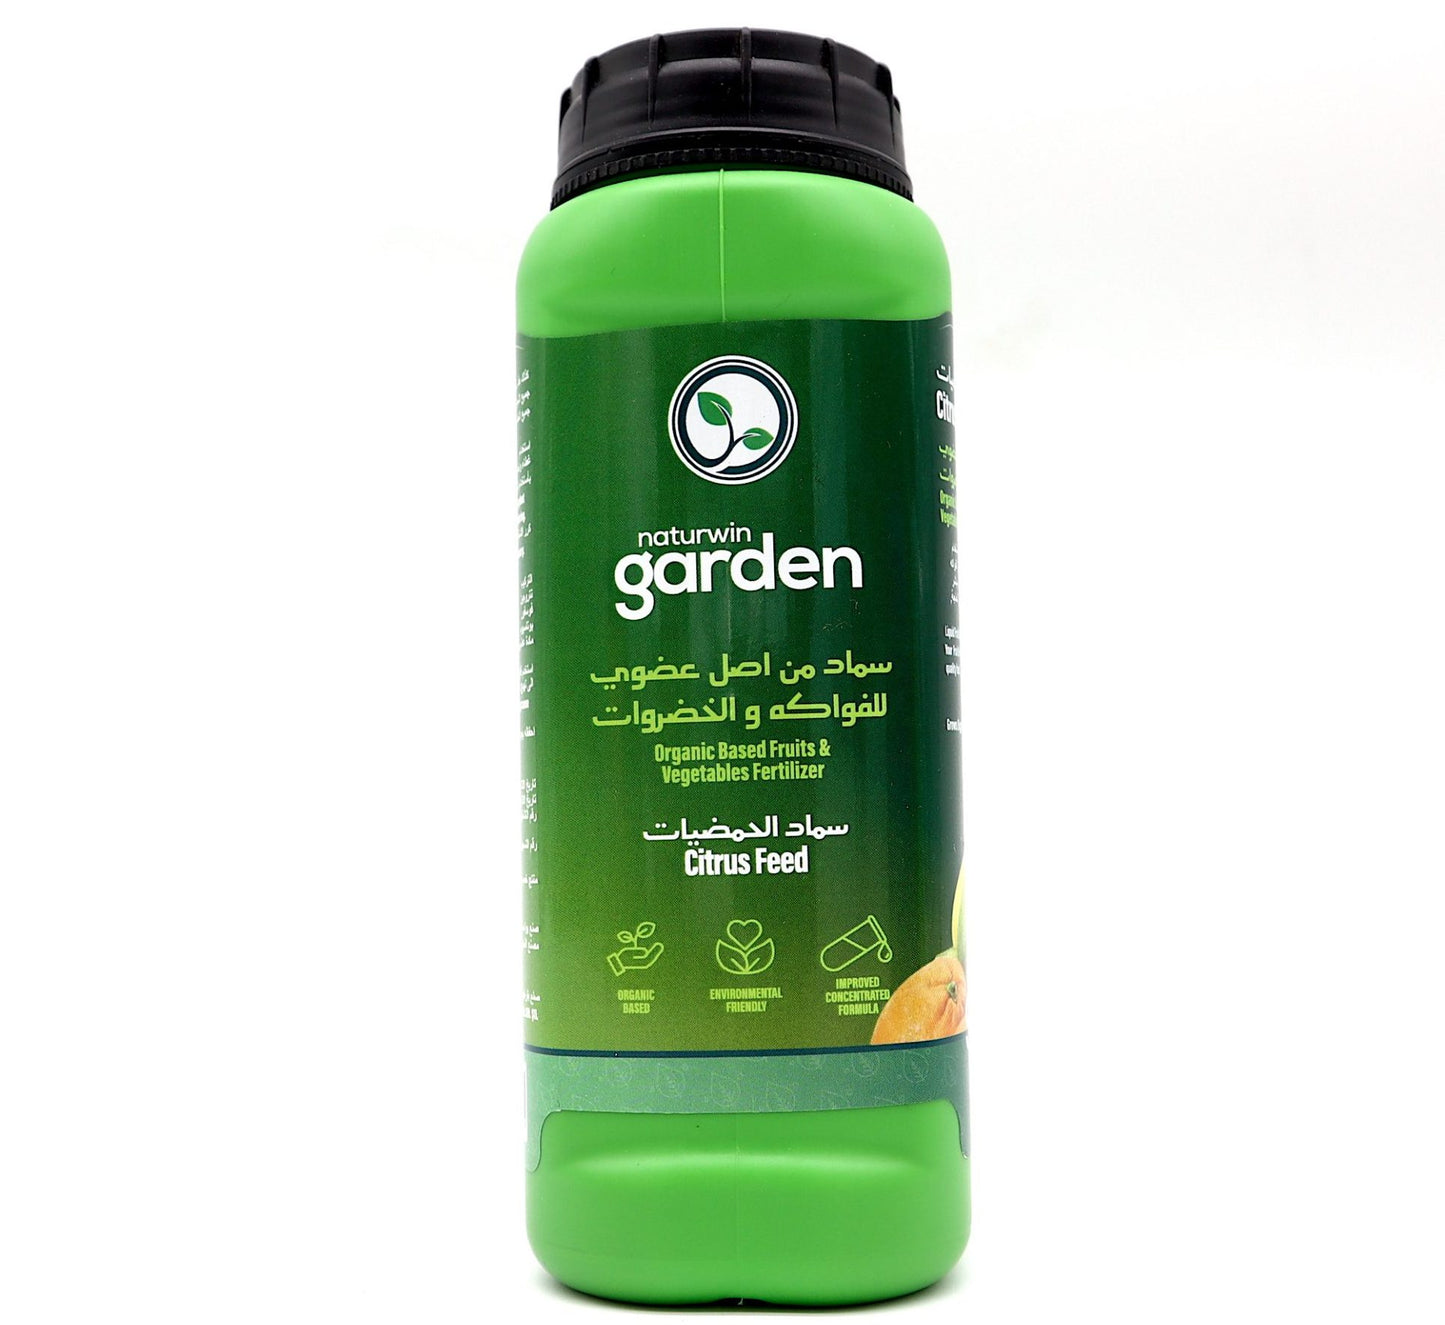 Organic Based Citrus Feed® "Fruit & Vegetables Fertilizer by Naturwin Garden UAE" 500ml